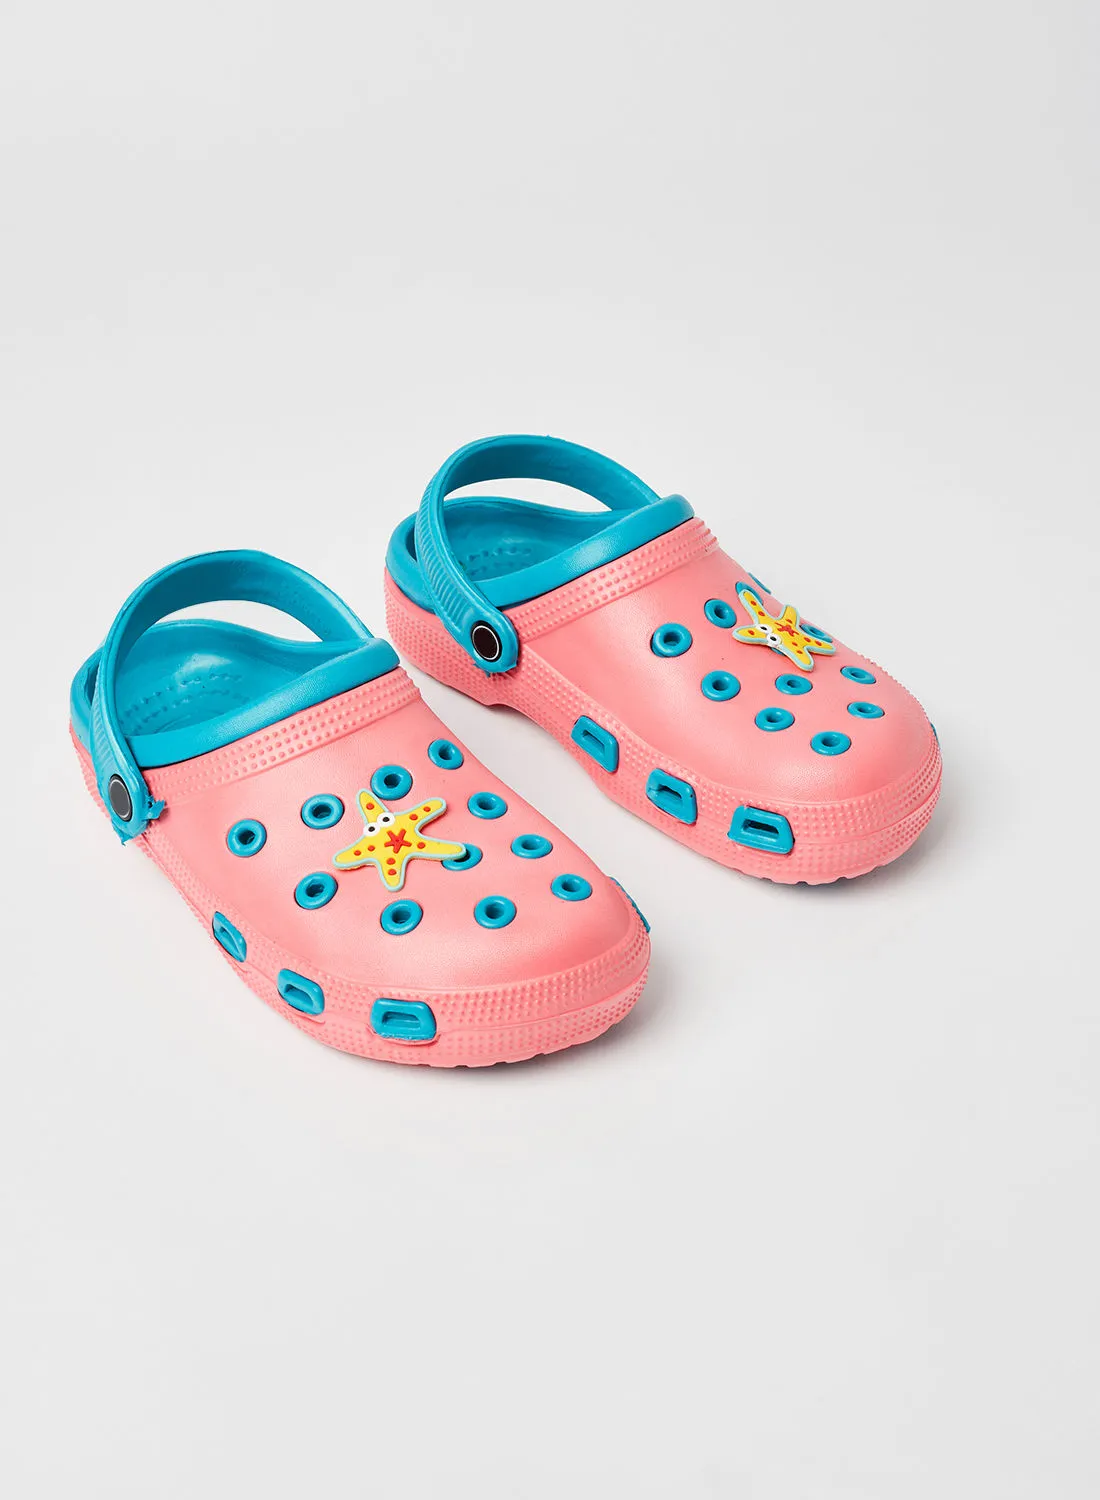 Hoppipola Stylish Slip-On Comfort Clogs Pink/Blue